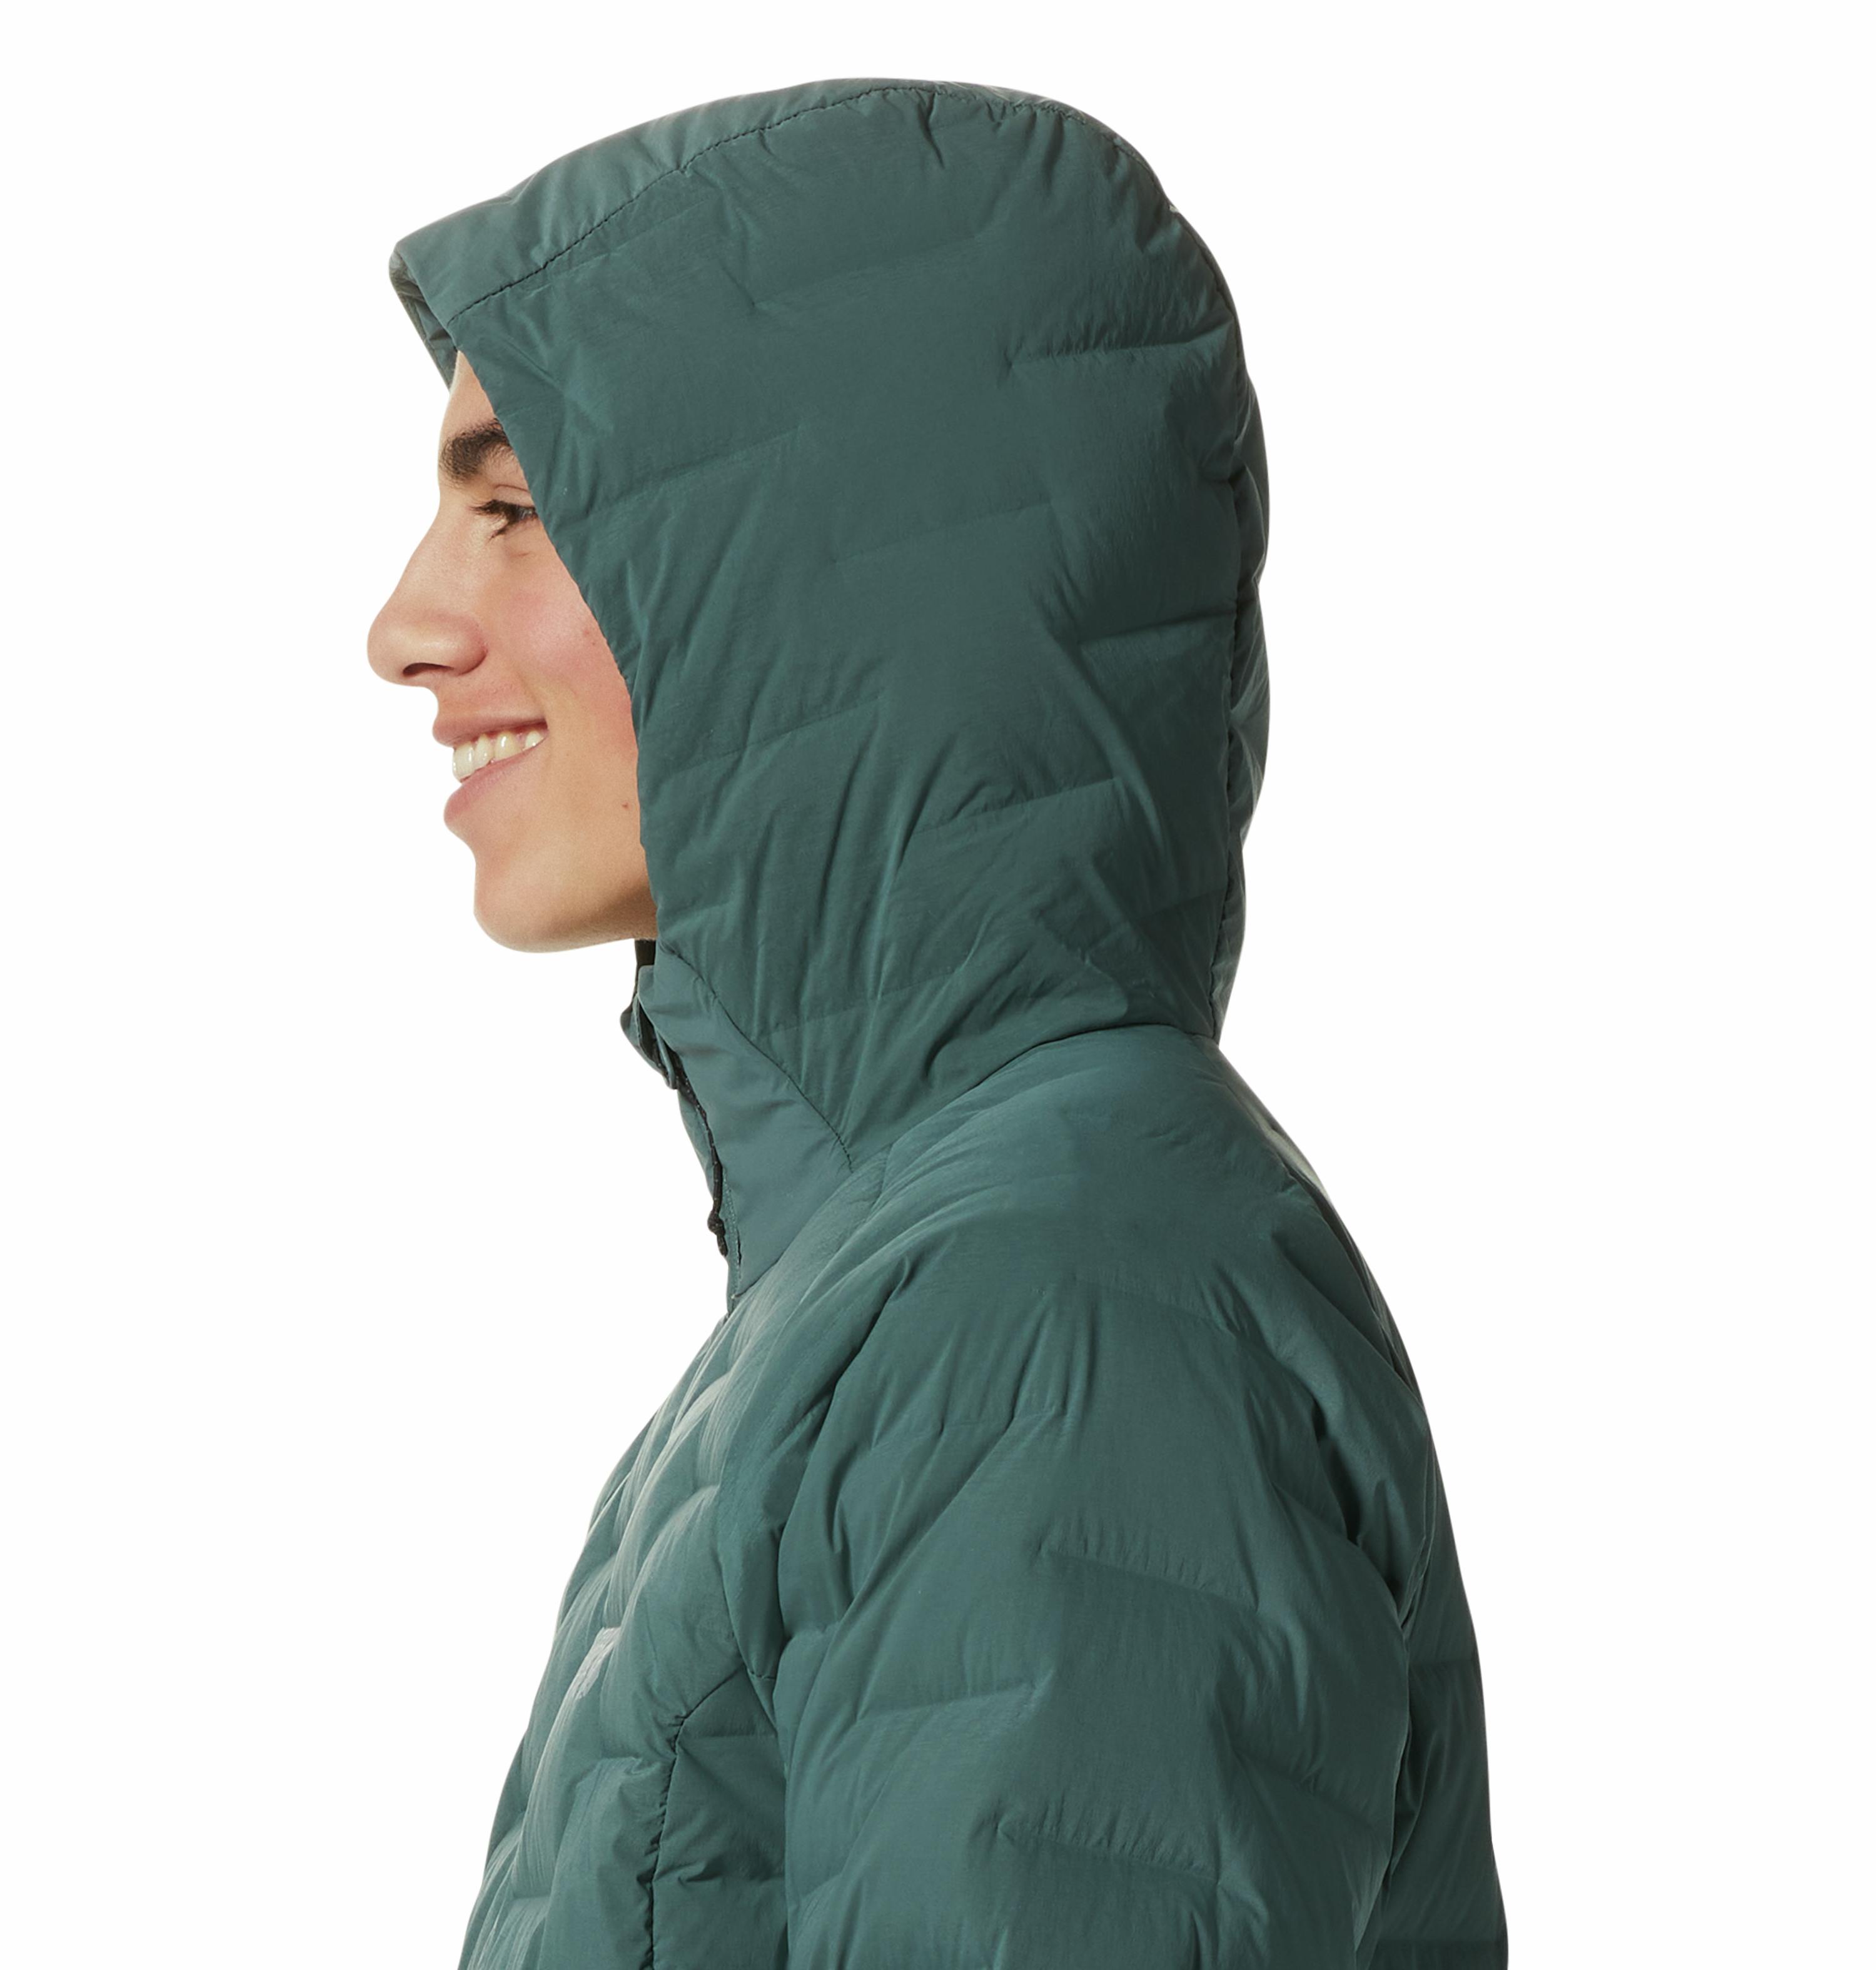 Mountain Hardwear Men's Stretchdown Hoody Insulated Jacket